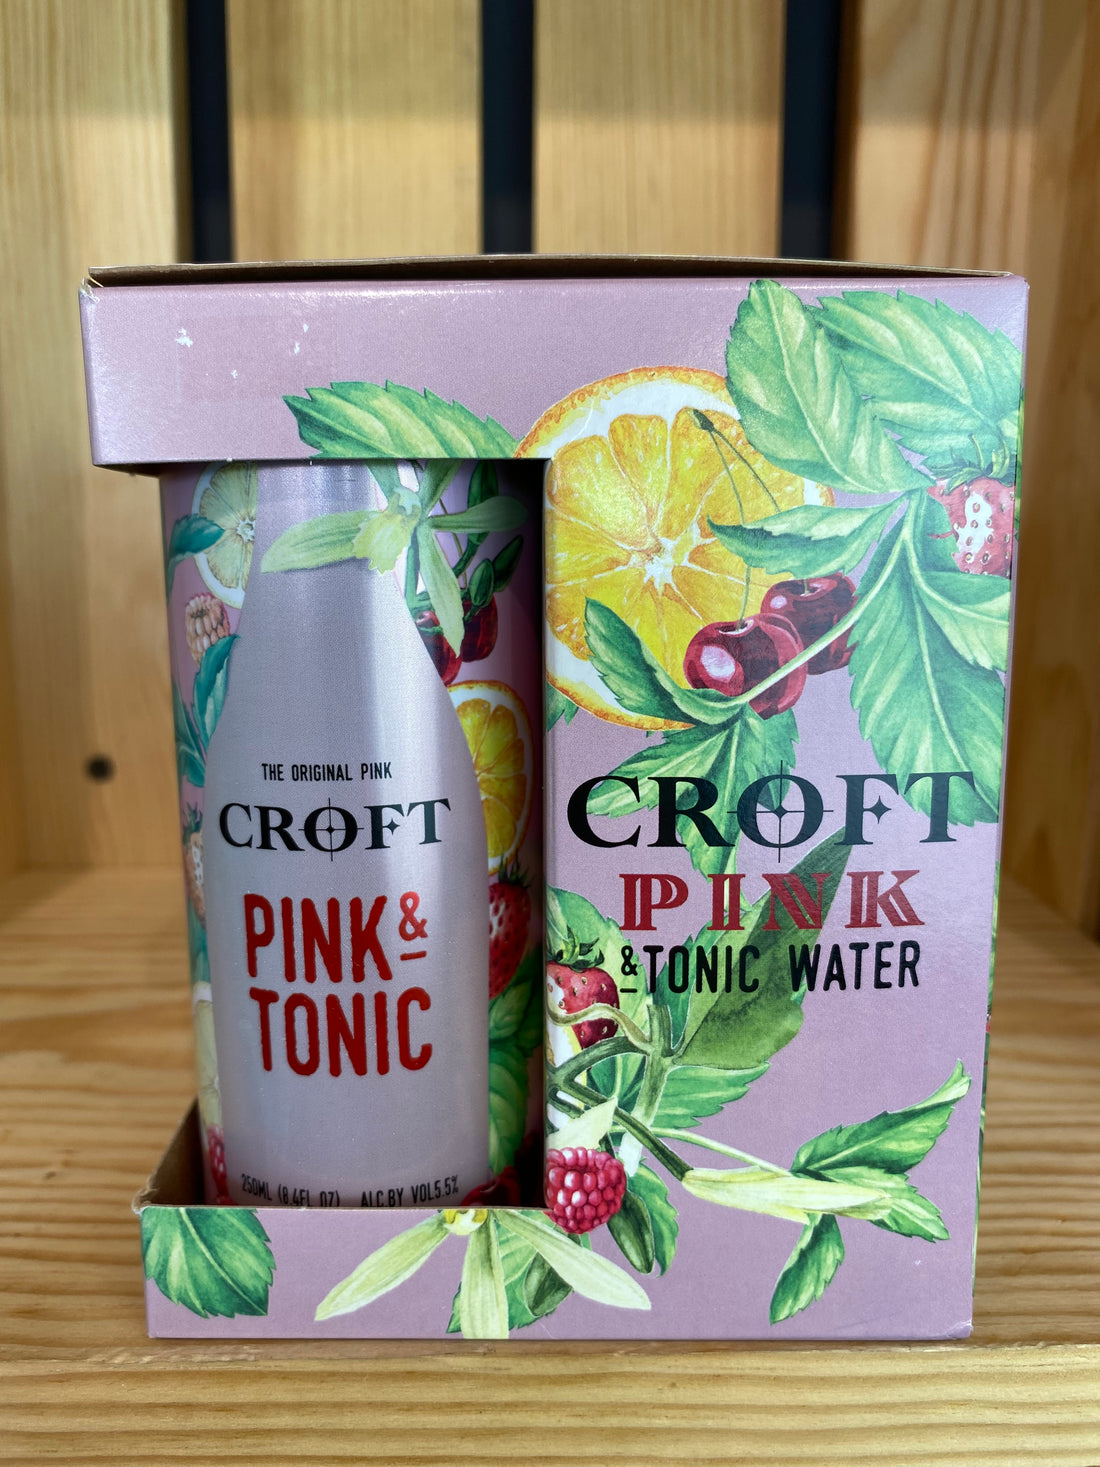 Croft Pink & Tonic/4 pk